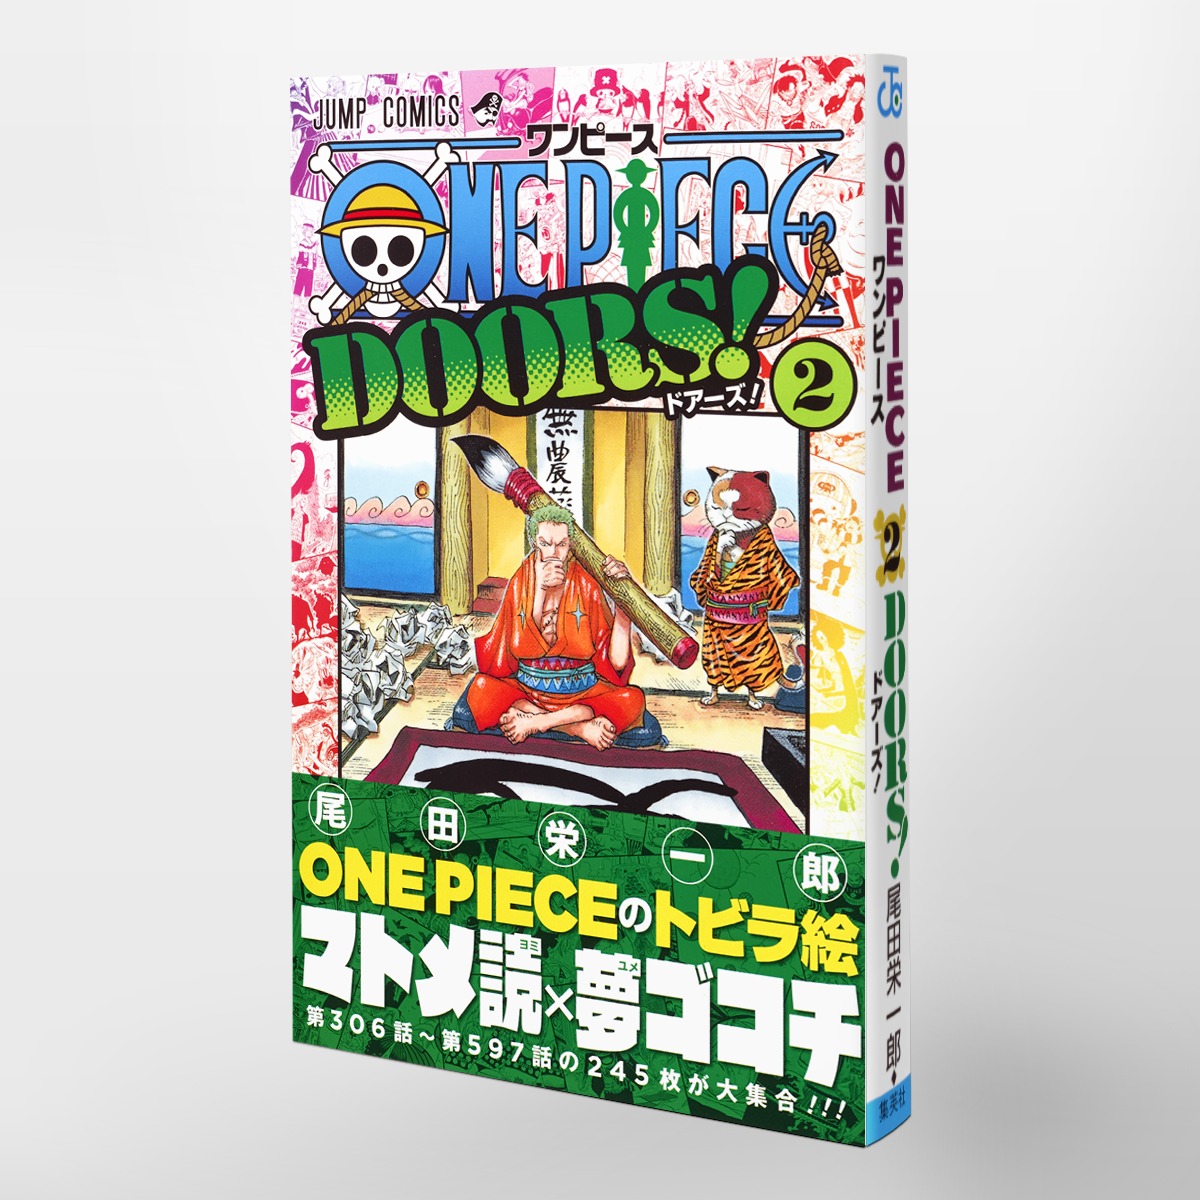 One Piece Doors 2 尾田 栄一郎 集英社コミック公式 S Manga